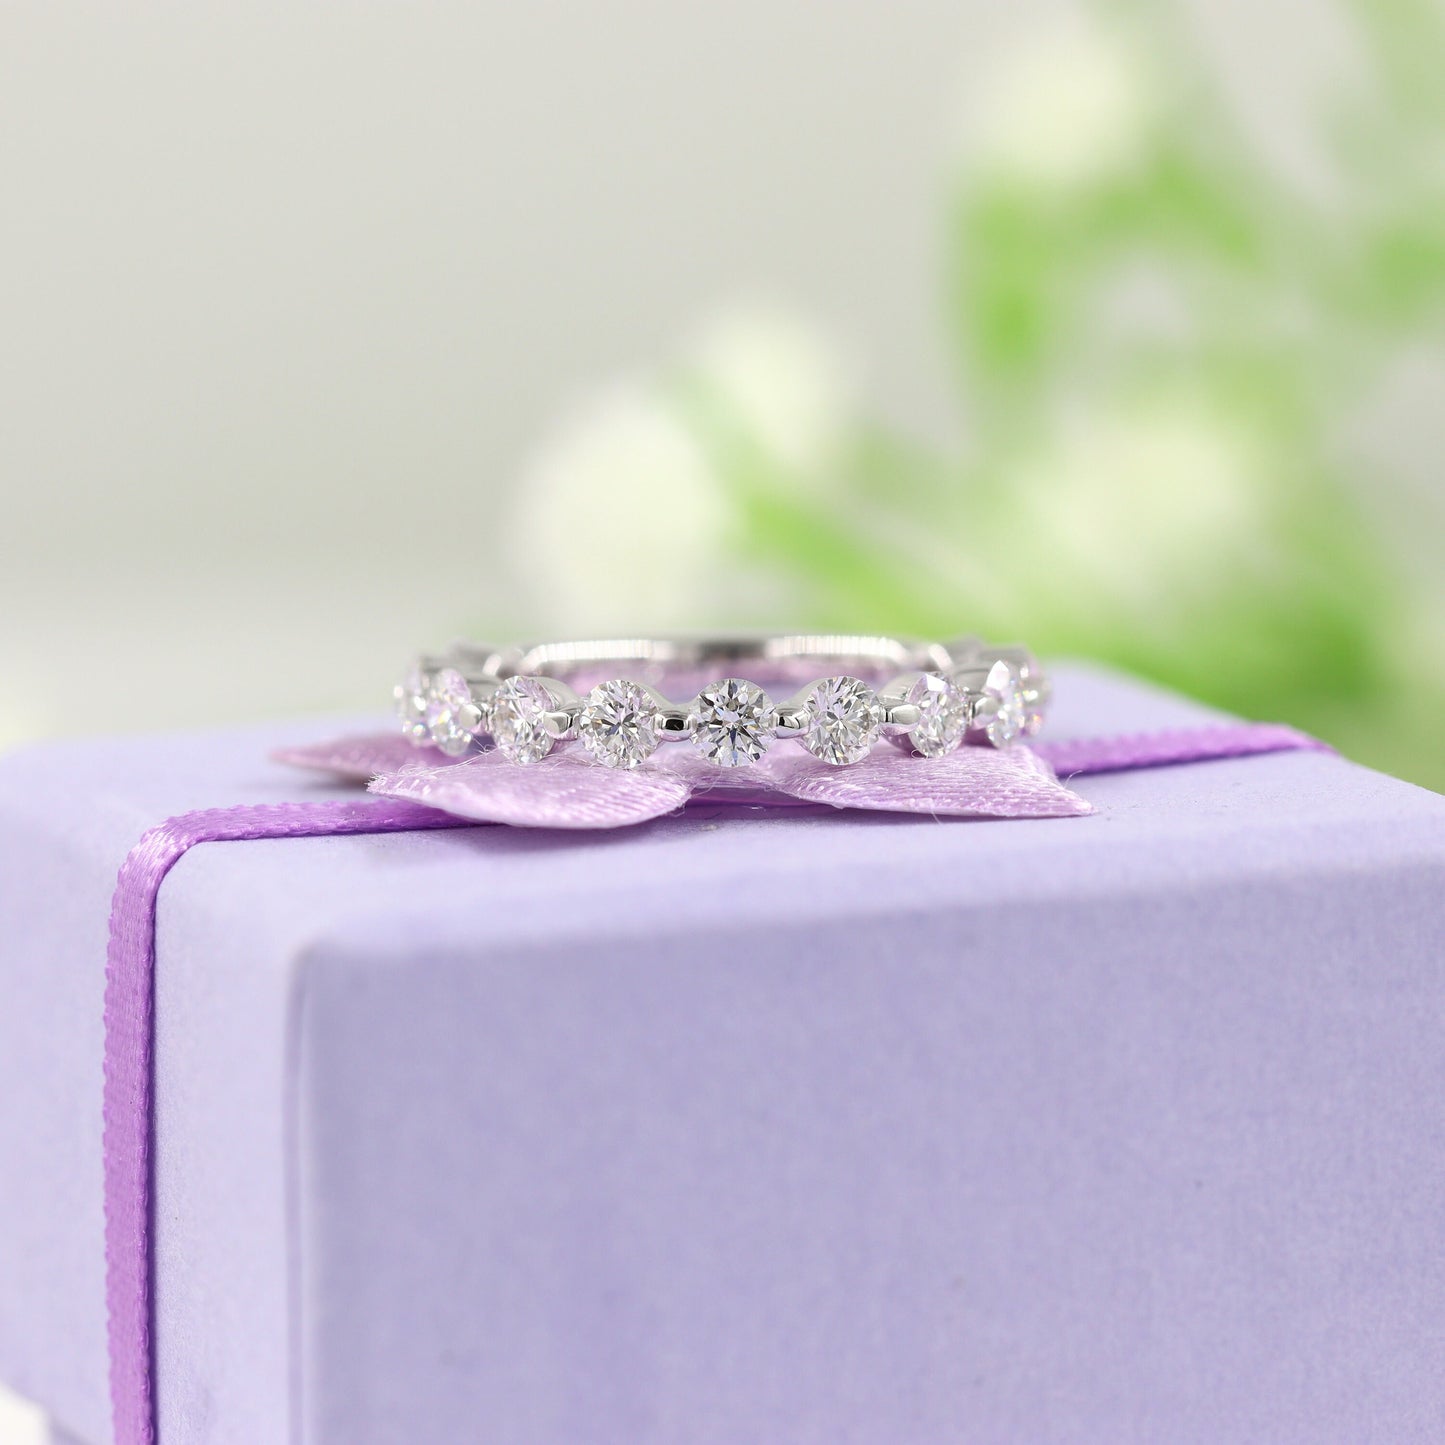 1ct Diamond Ring/13stones diamond Wedding Band/Stackable Single Prong Diamond Ring/Half Eternity Diamond Ring/Gift for her/Anniversary Gift